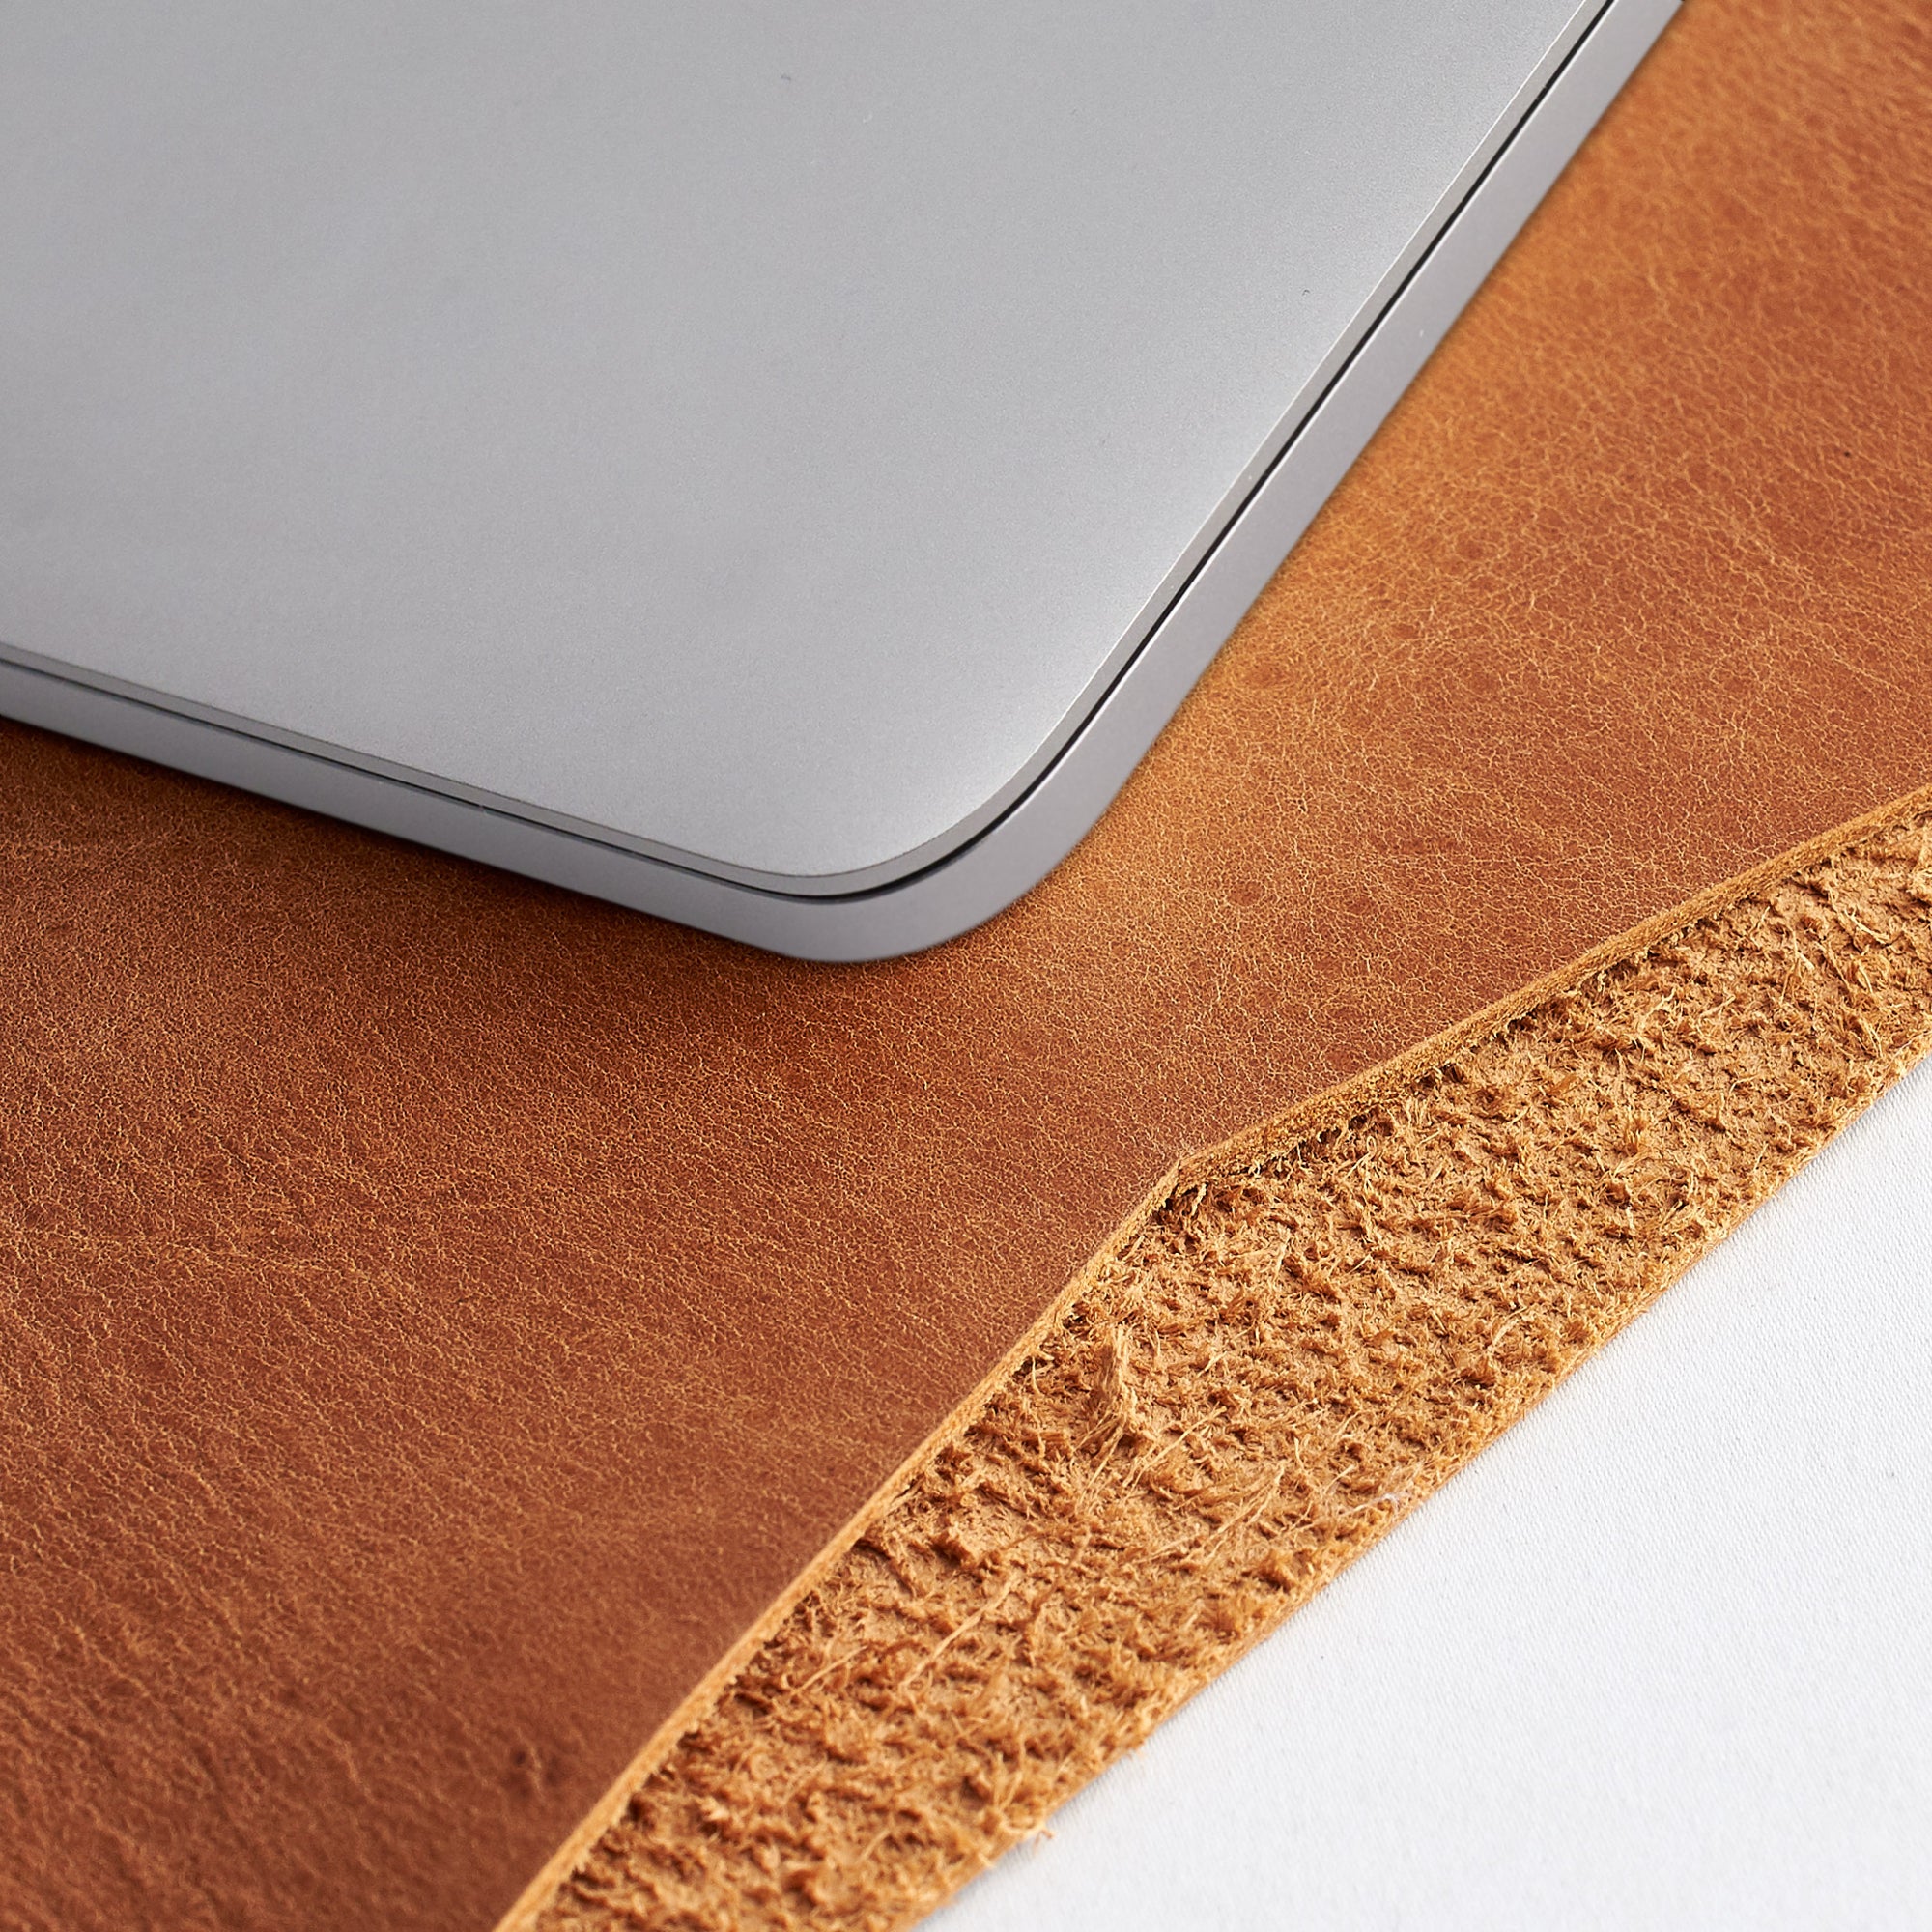 Soft interior case. Basic Microsoft Surface light brown sleeve